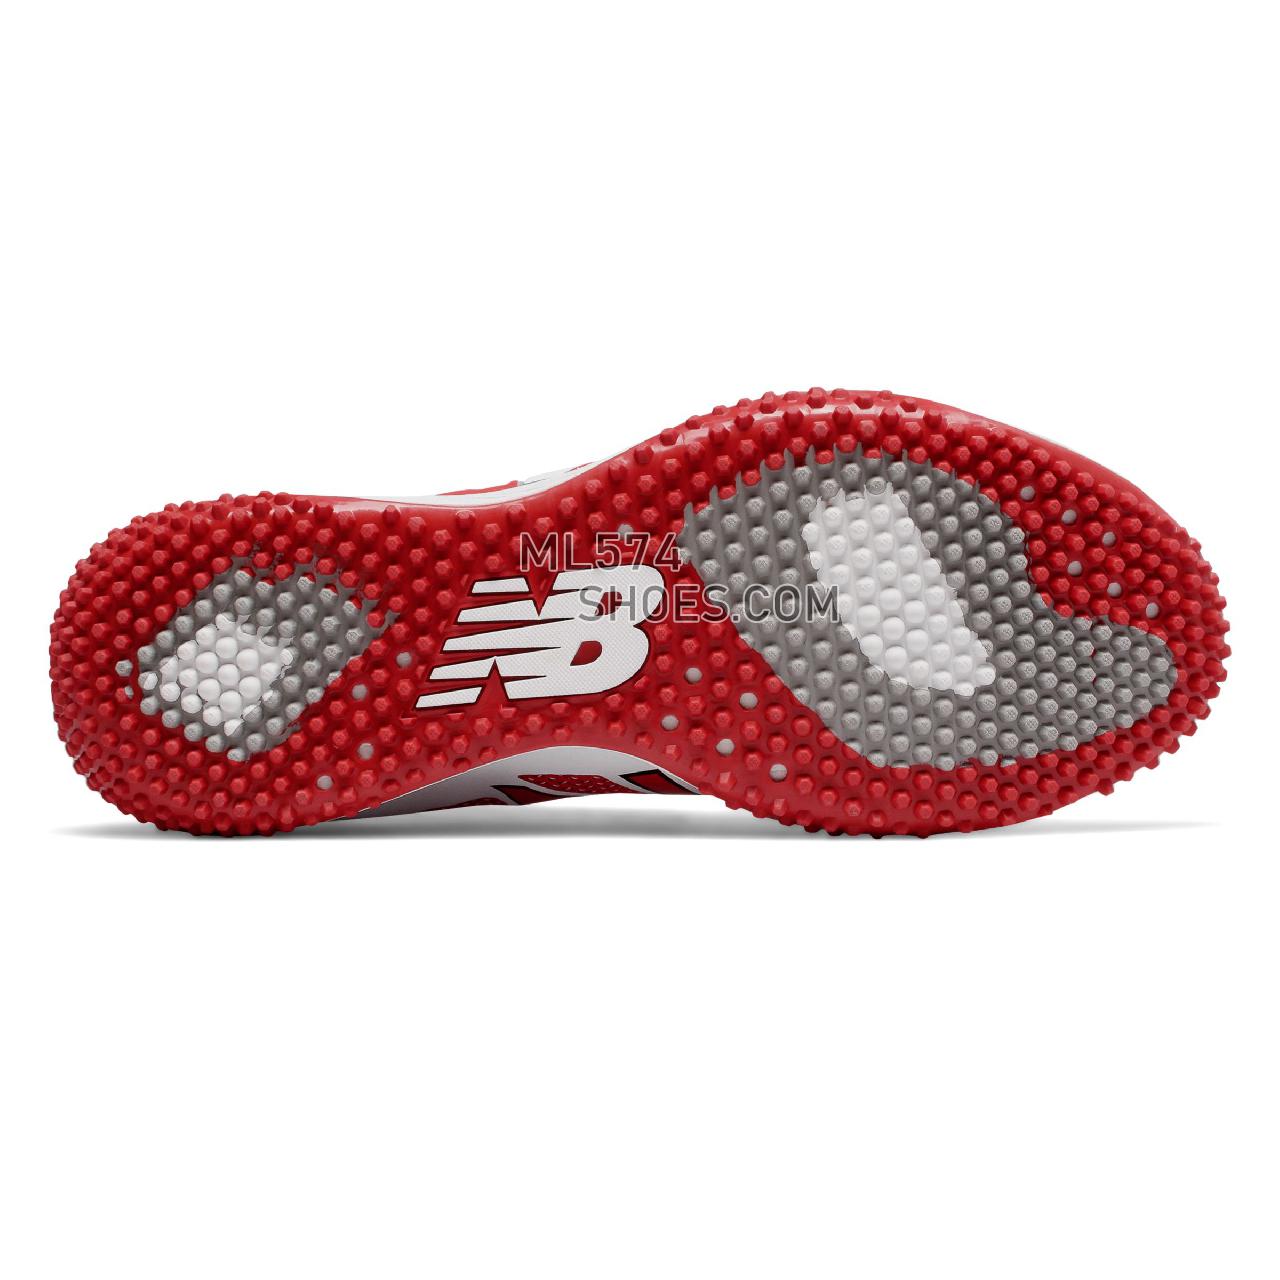 New Balance Turf 4040v4 - Men's 4040 - Baseball Red with White - T4040TR4